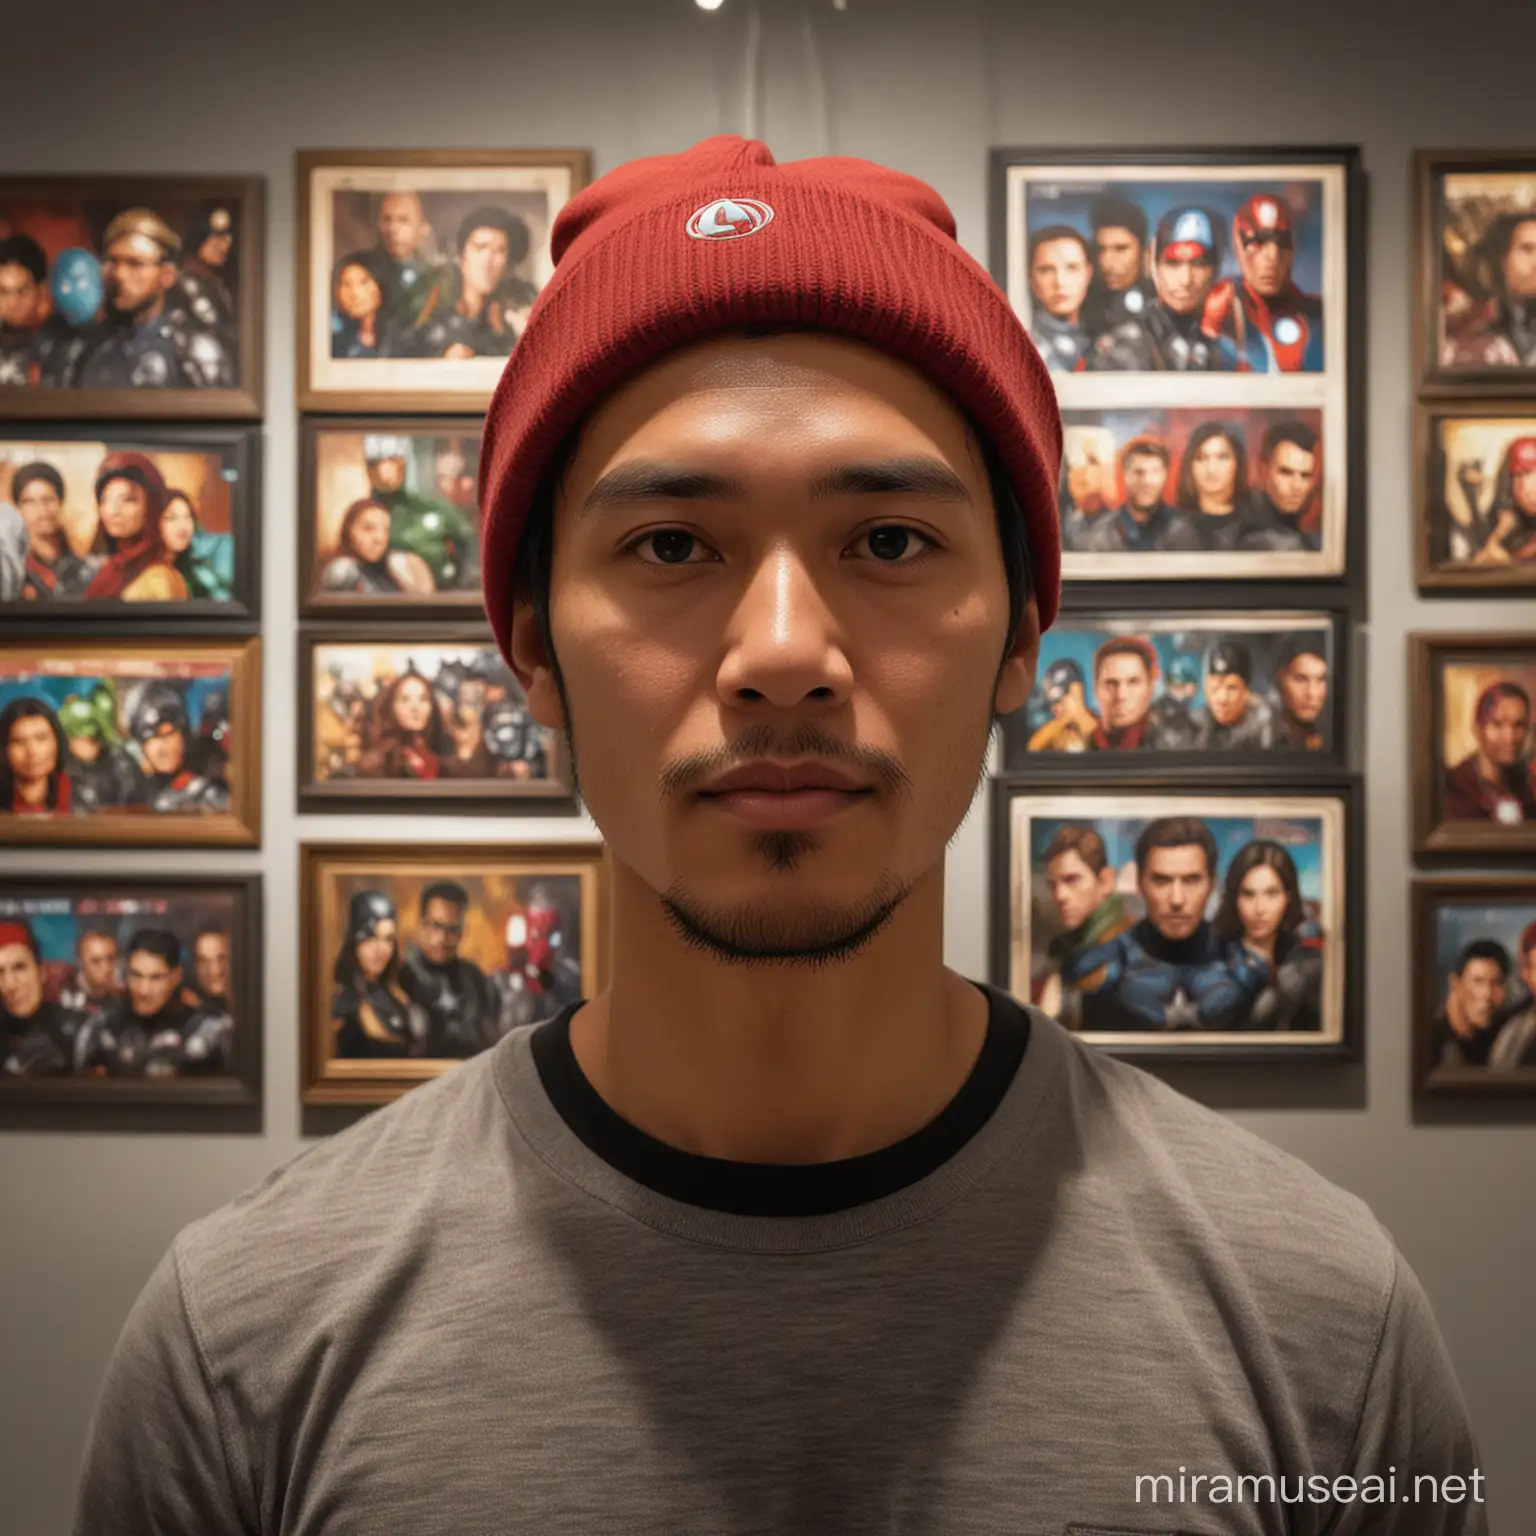 Contemplative Indonesian Man in Marvel TShirt at Art Gallery